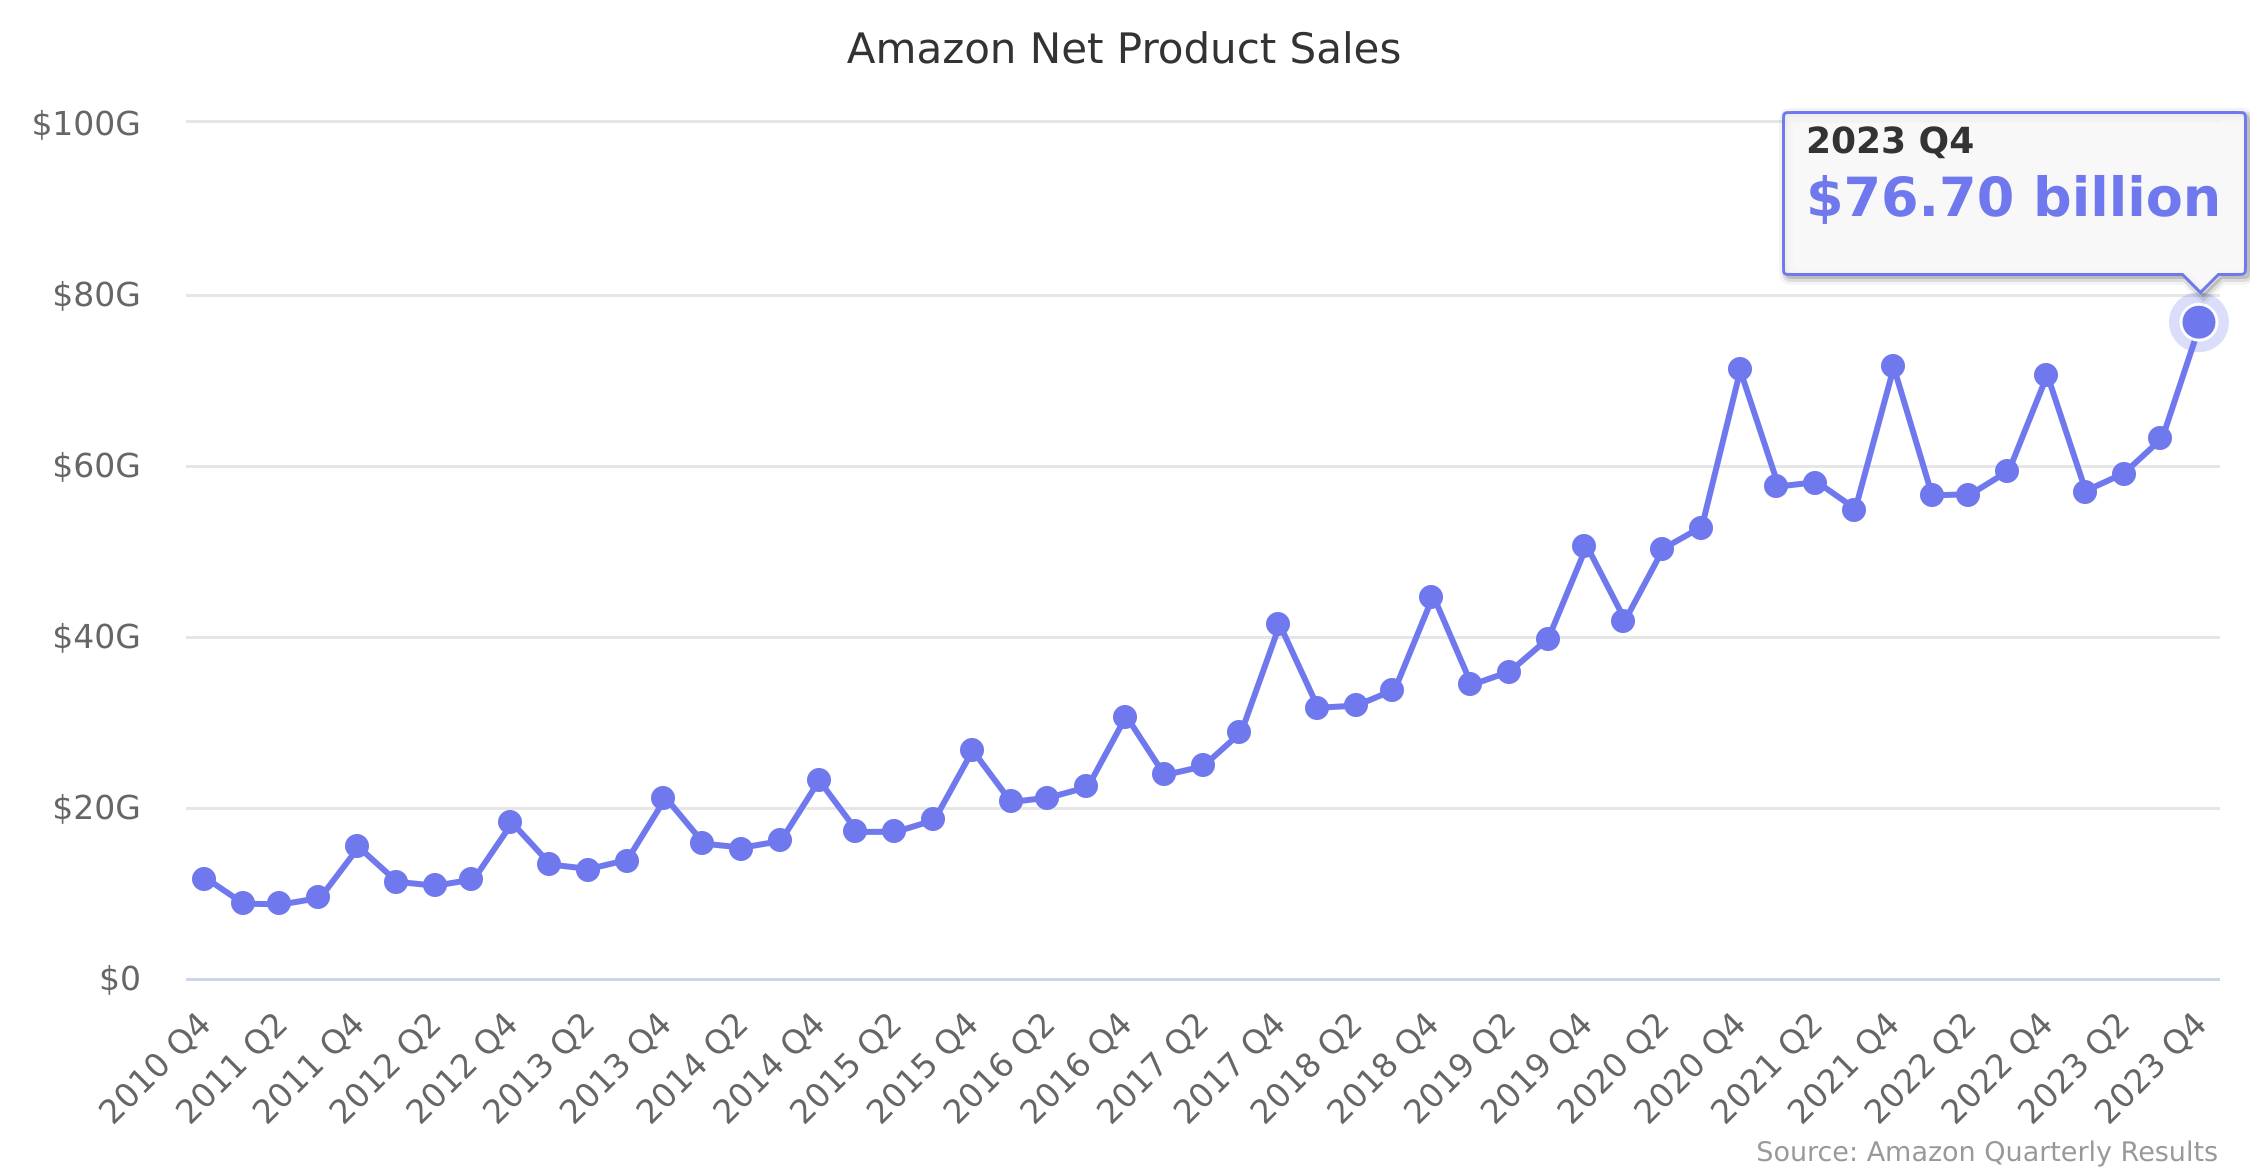 Amazon Net Product Sales